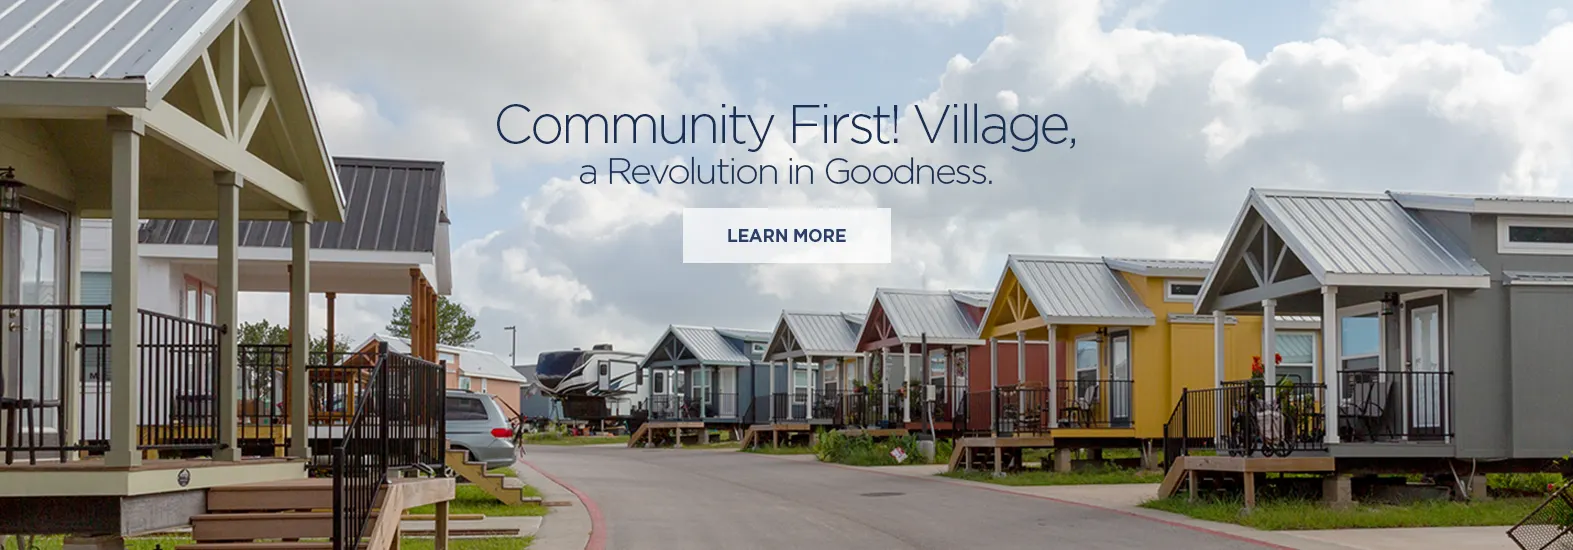 Community First! Village: A Revolution in Goodess 